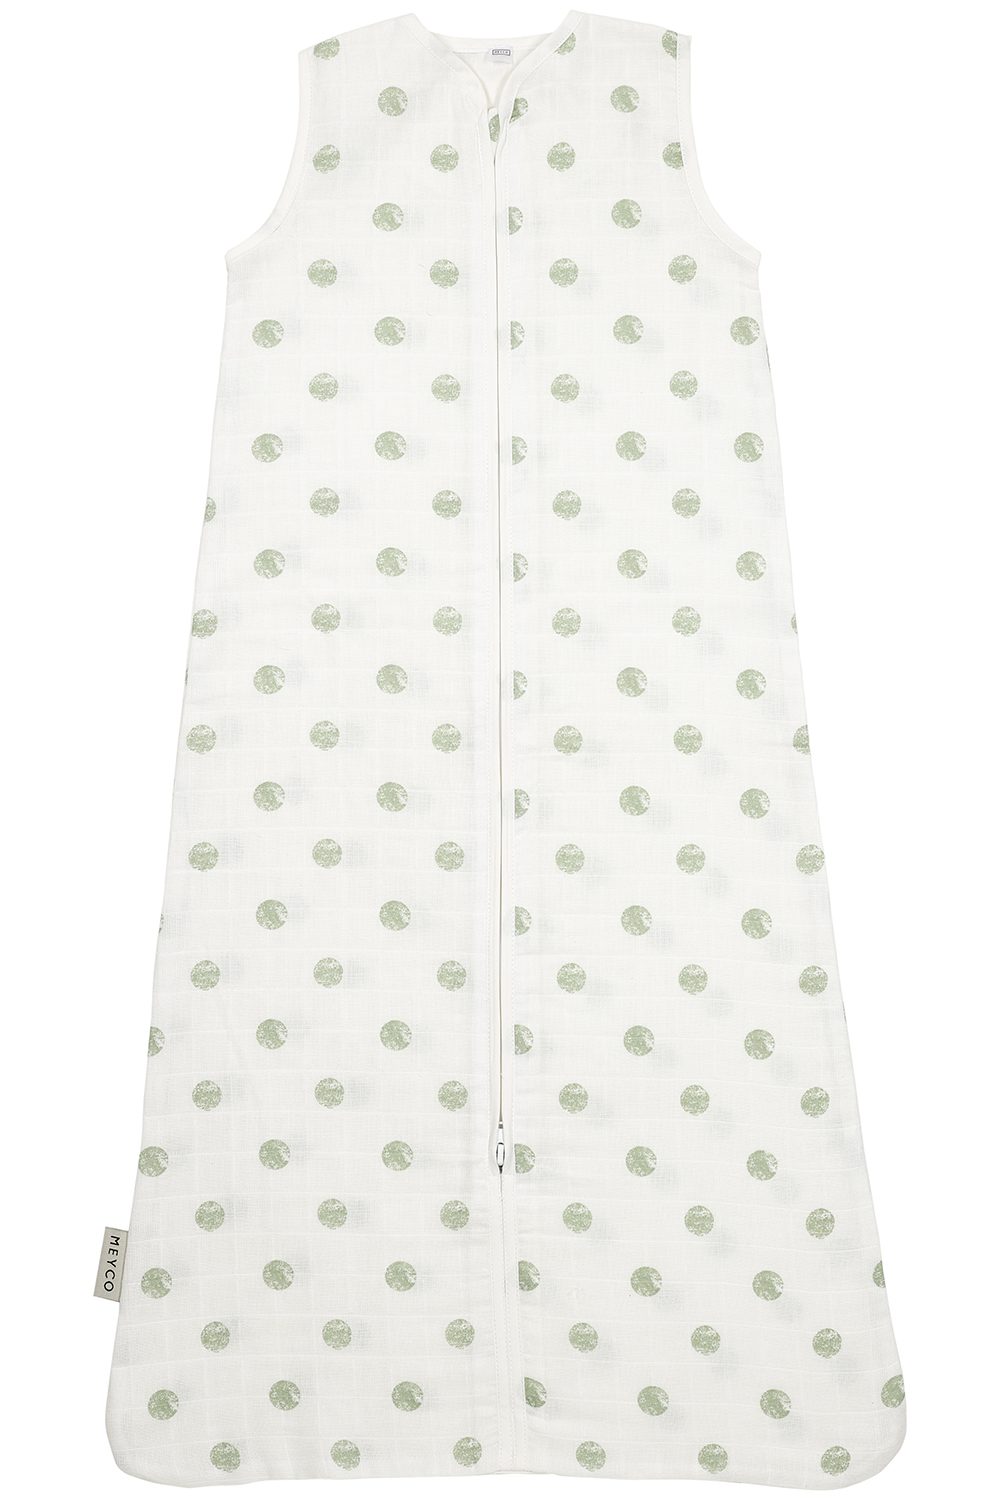 Sleepingbag muslin Dots - soft green - 110cm